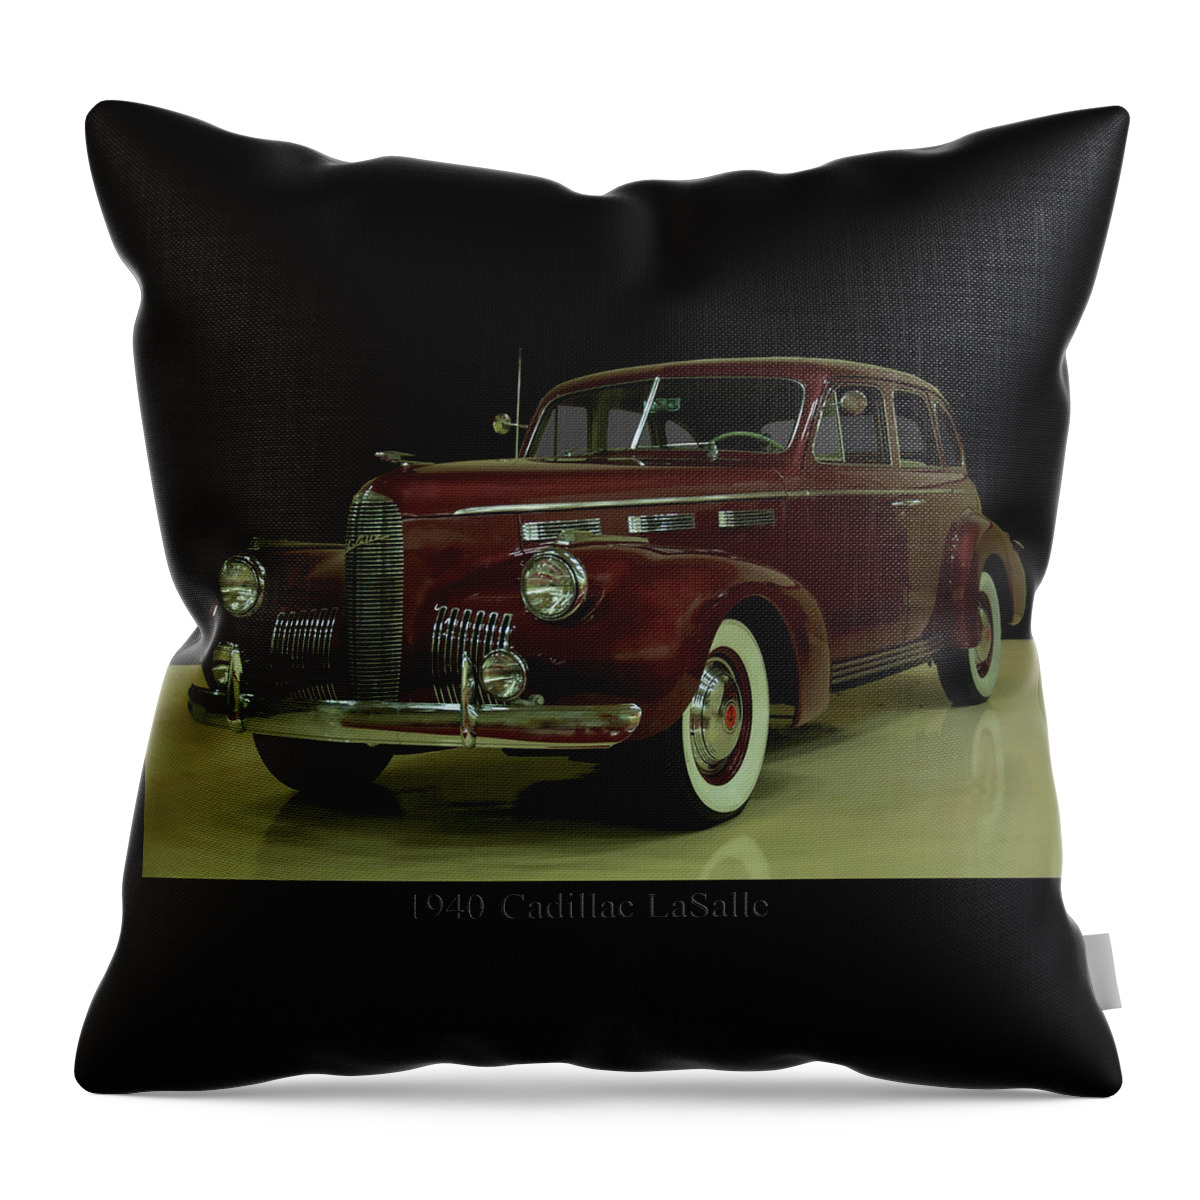 1940 Cadillac Lasalle Throw Pillow featuring the photograph 1940 Cadillac LaSalle by Flees Photos